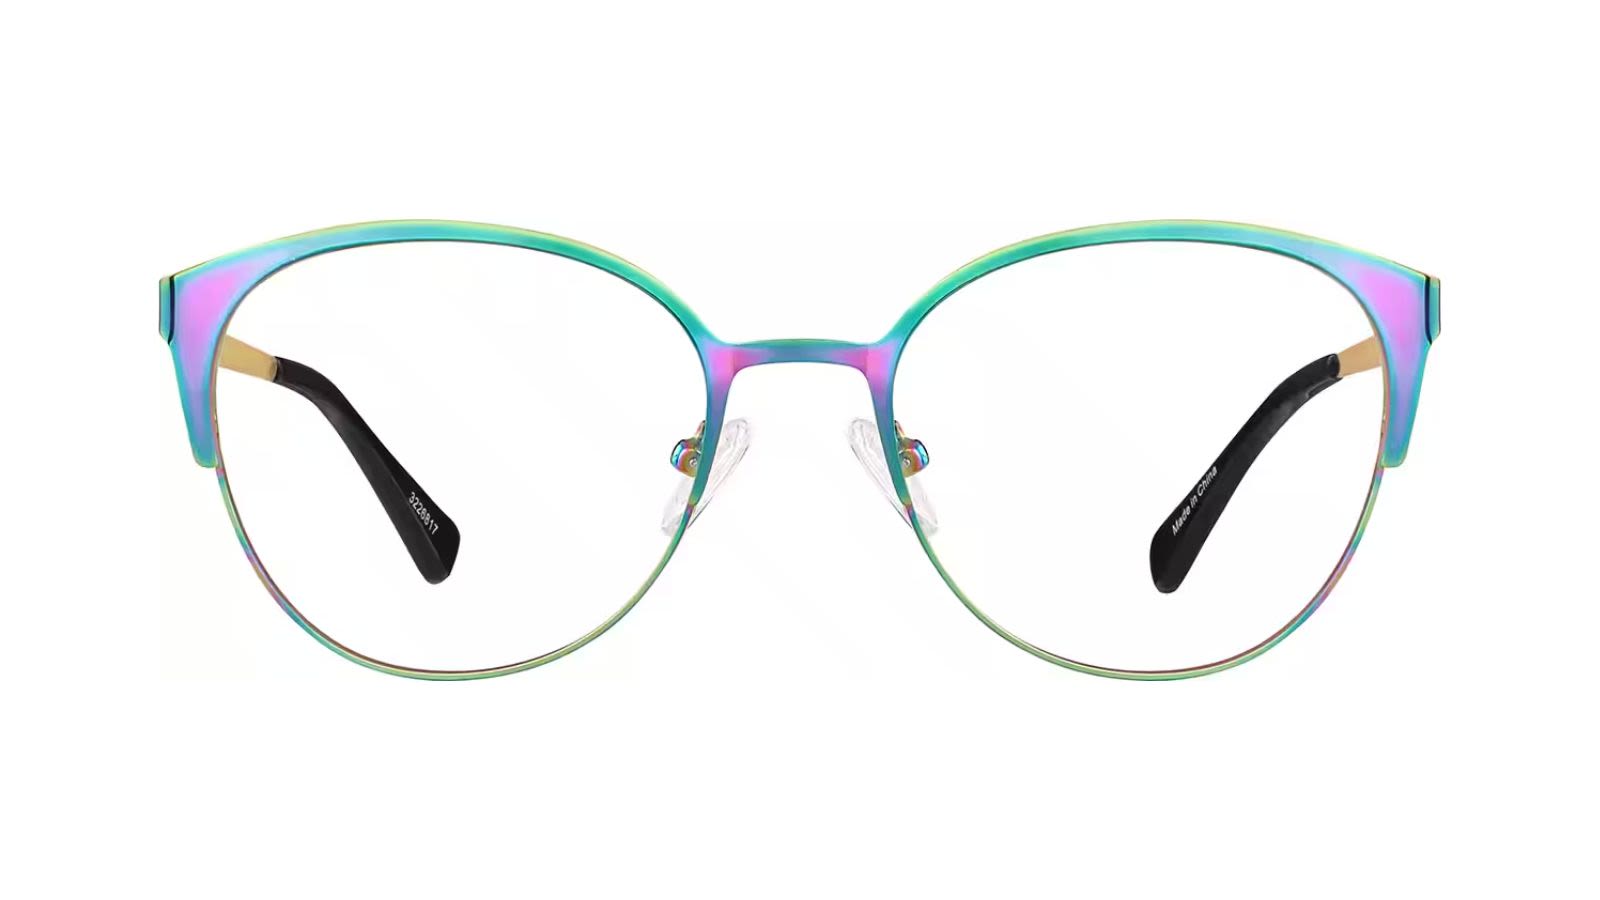 https://media.cnn.com/api/v1/images/stellar/prod/10-iridescent-round-glasses.jpg?c=original